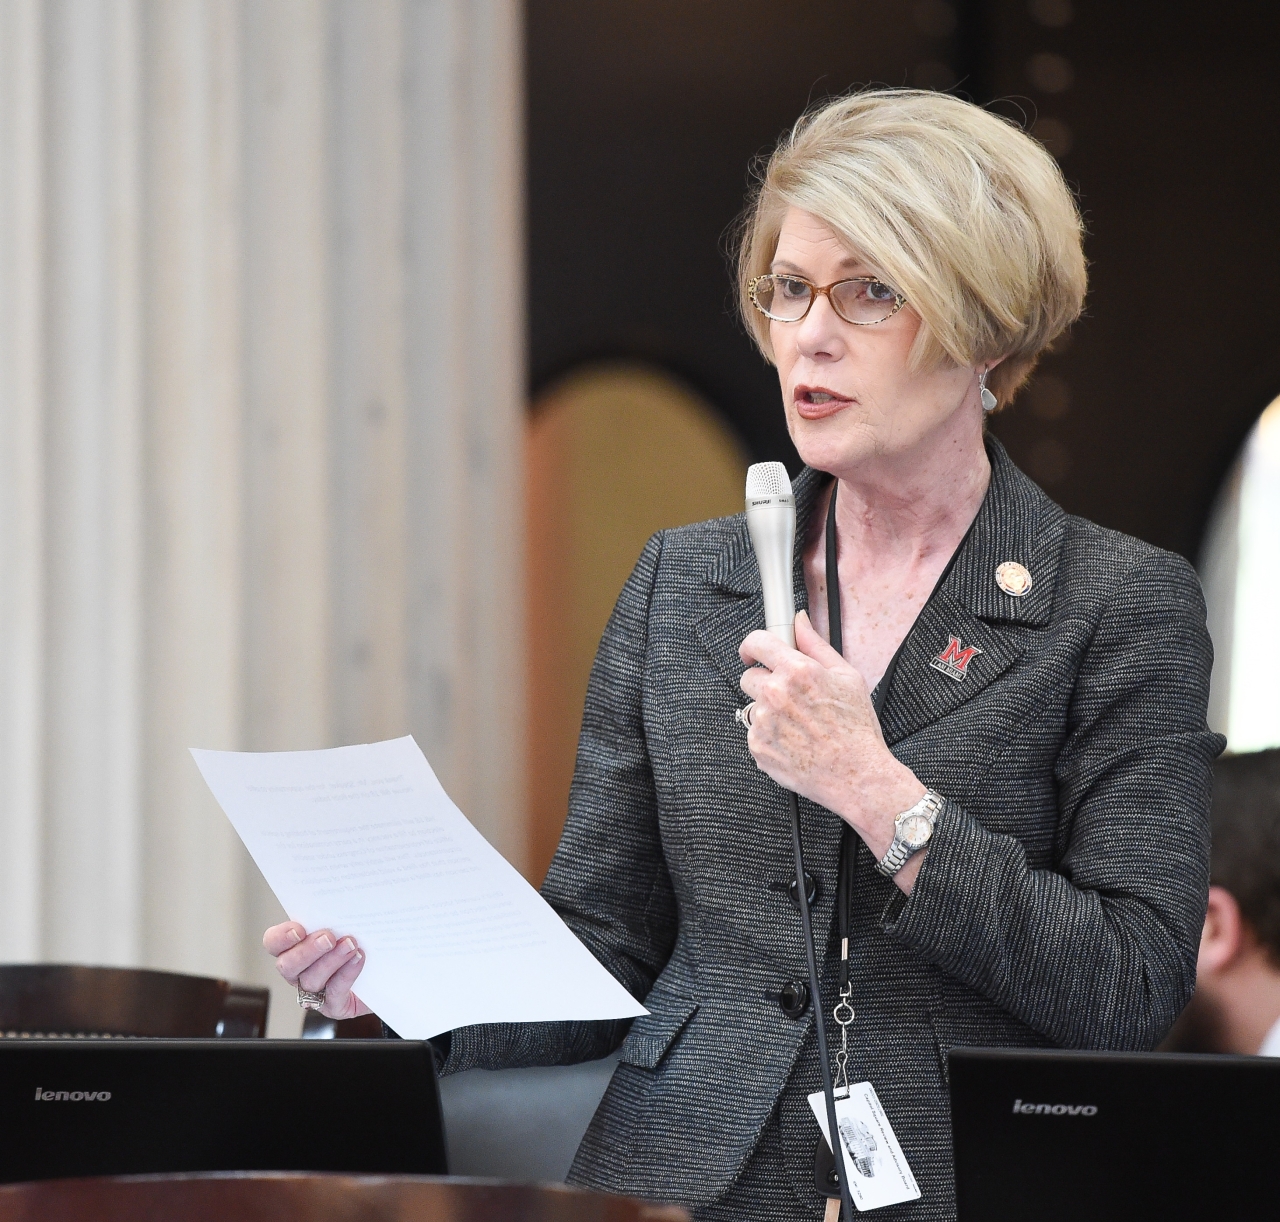 Rep. Pelanda's Bill to Eliminate Unnecessary Elections Passes Ohio House